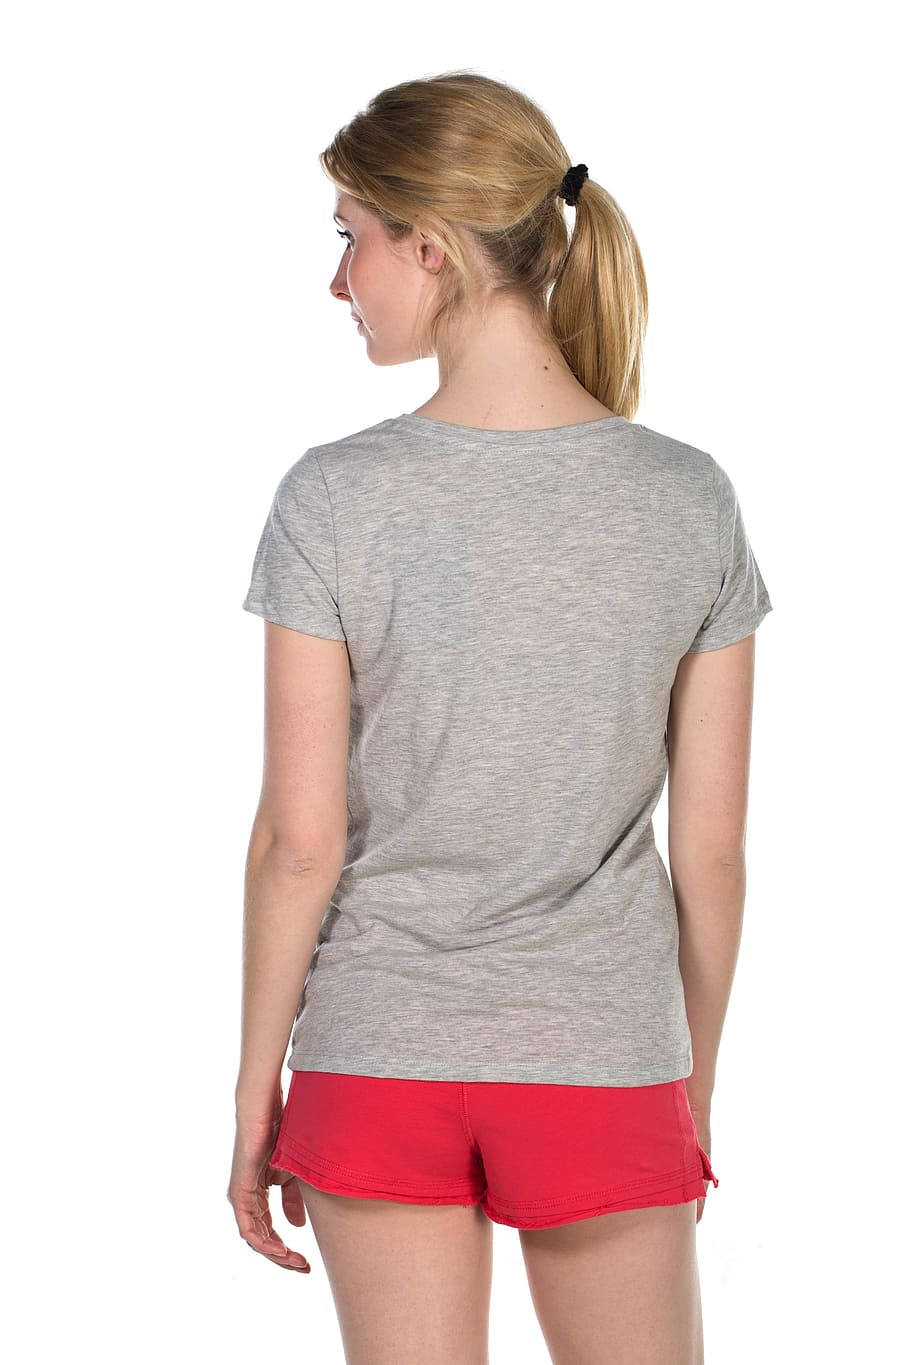 woman in gray t-shirt, Girl, Model, Shorts, Leg, Summer, red